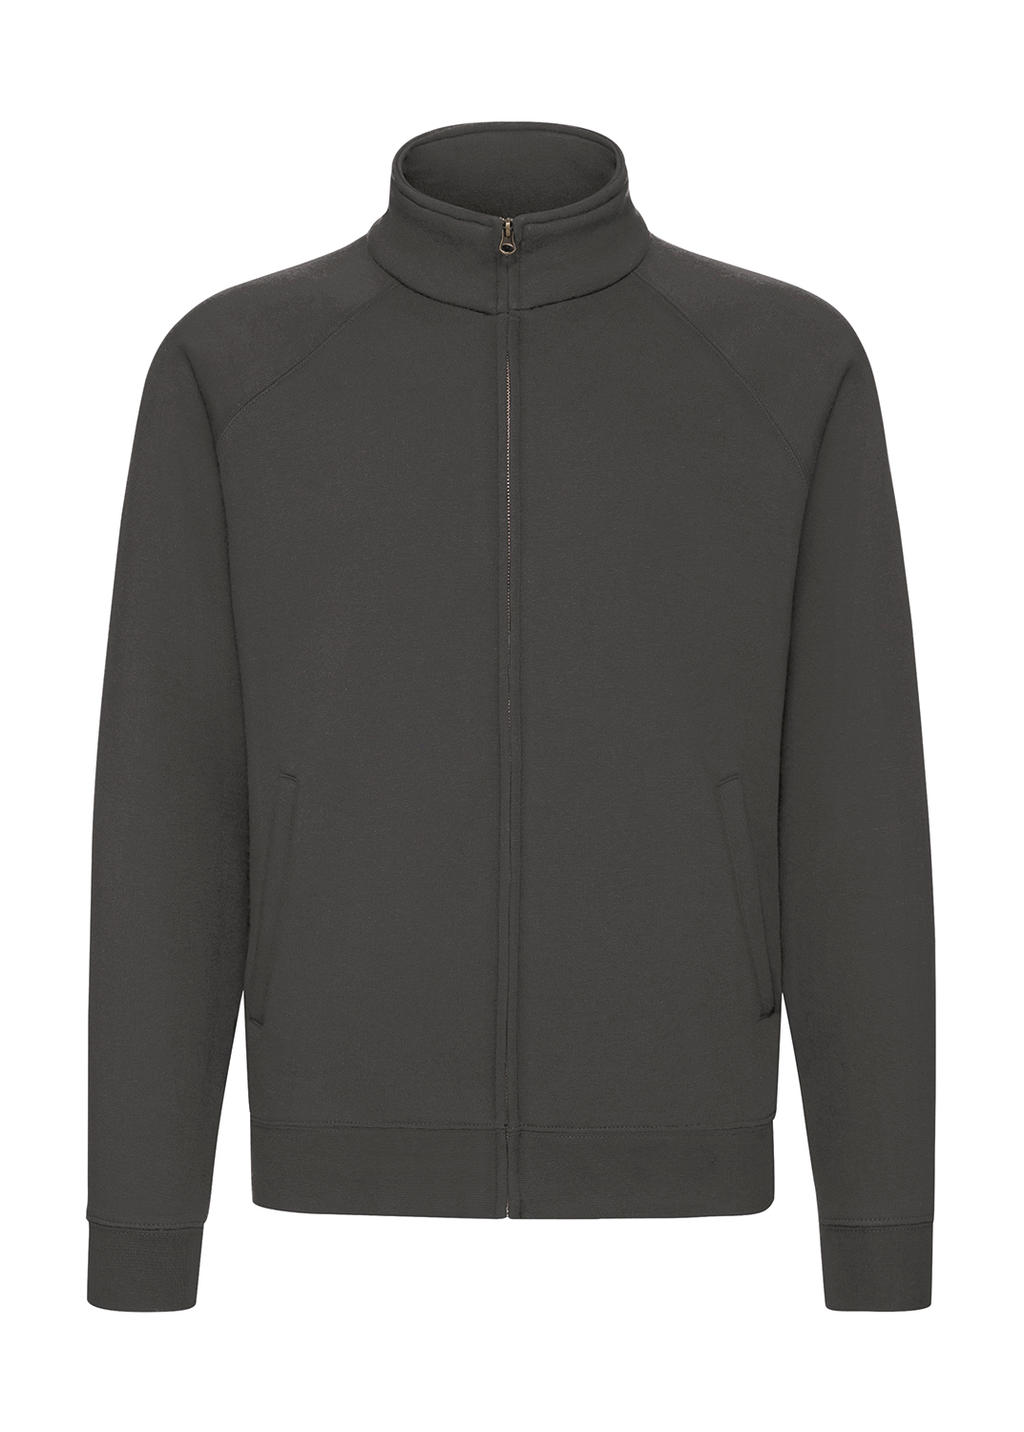  Premium Sweat Jacket in Farbe Light Graphite